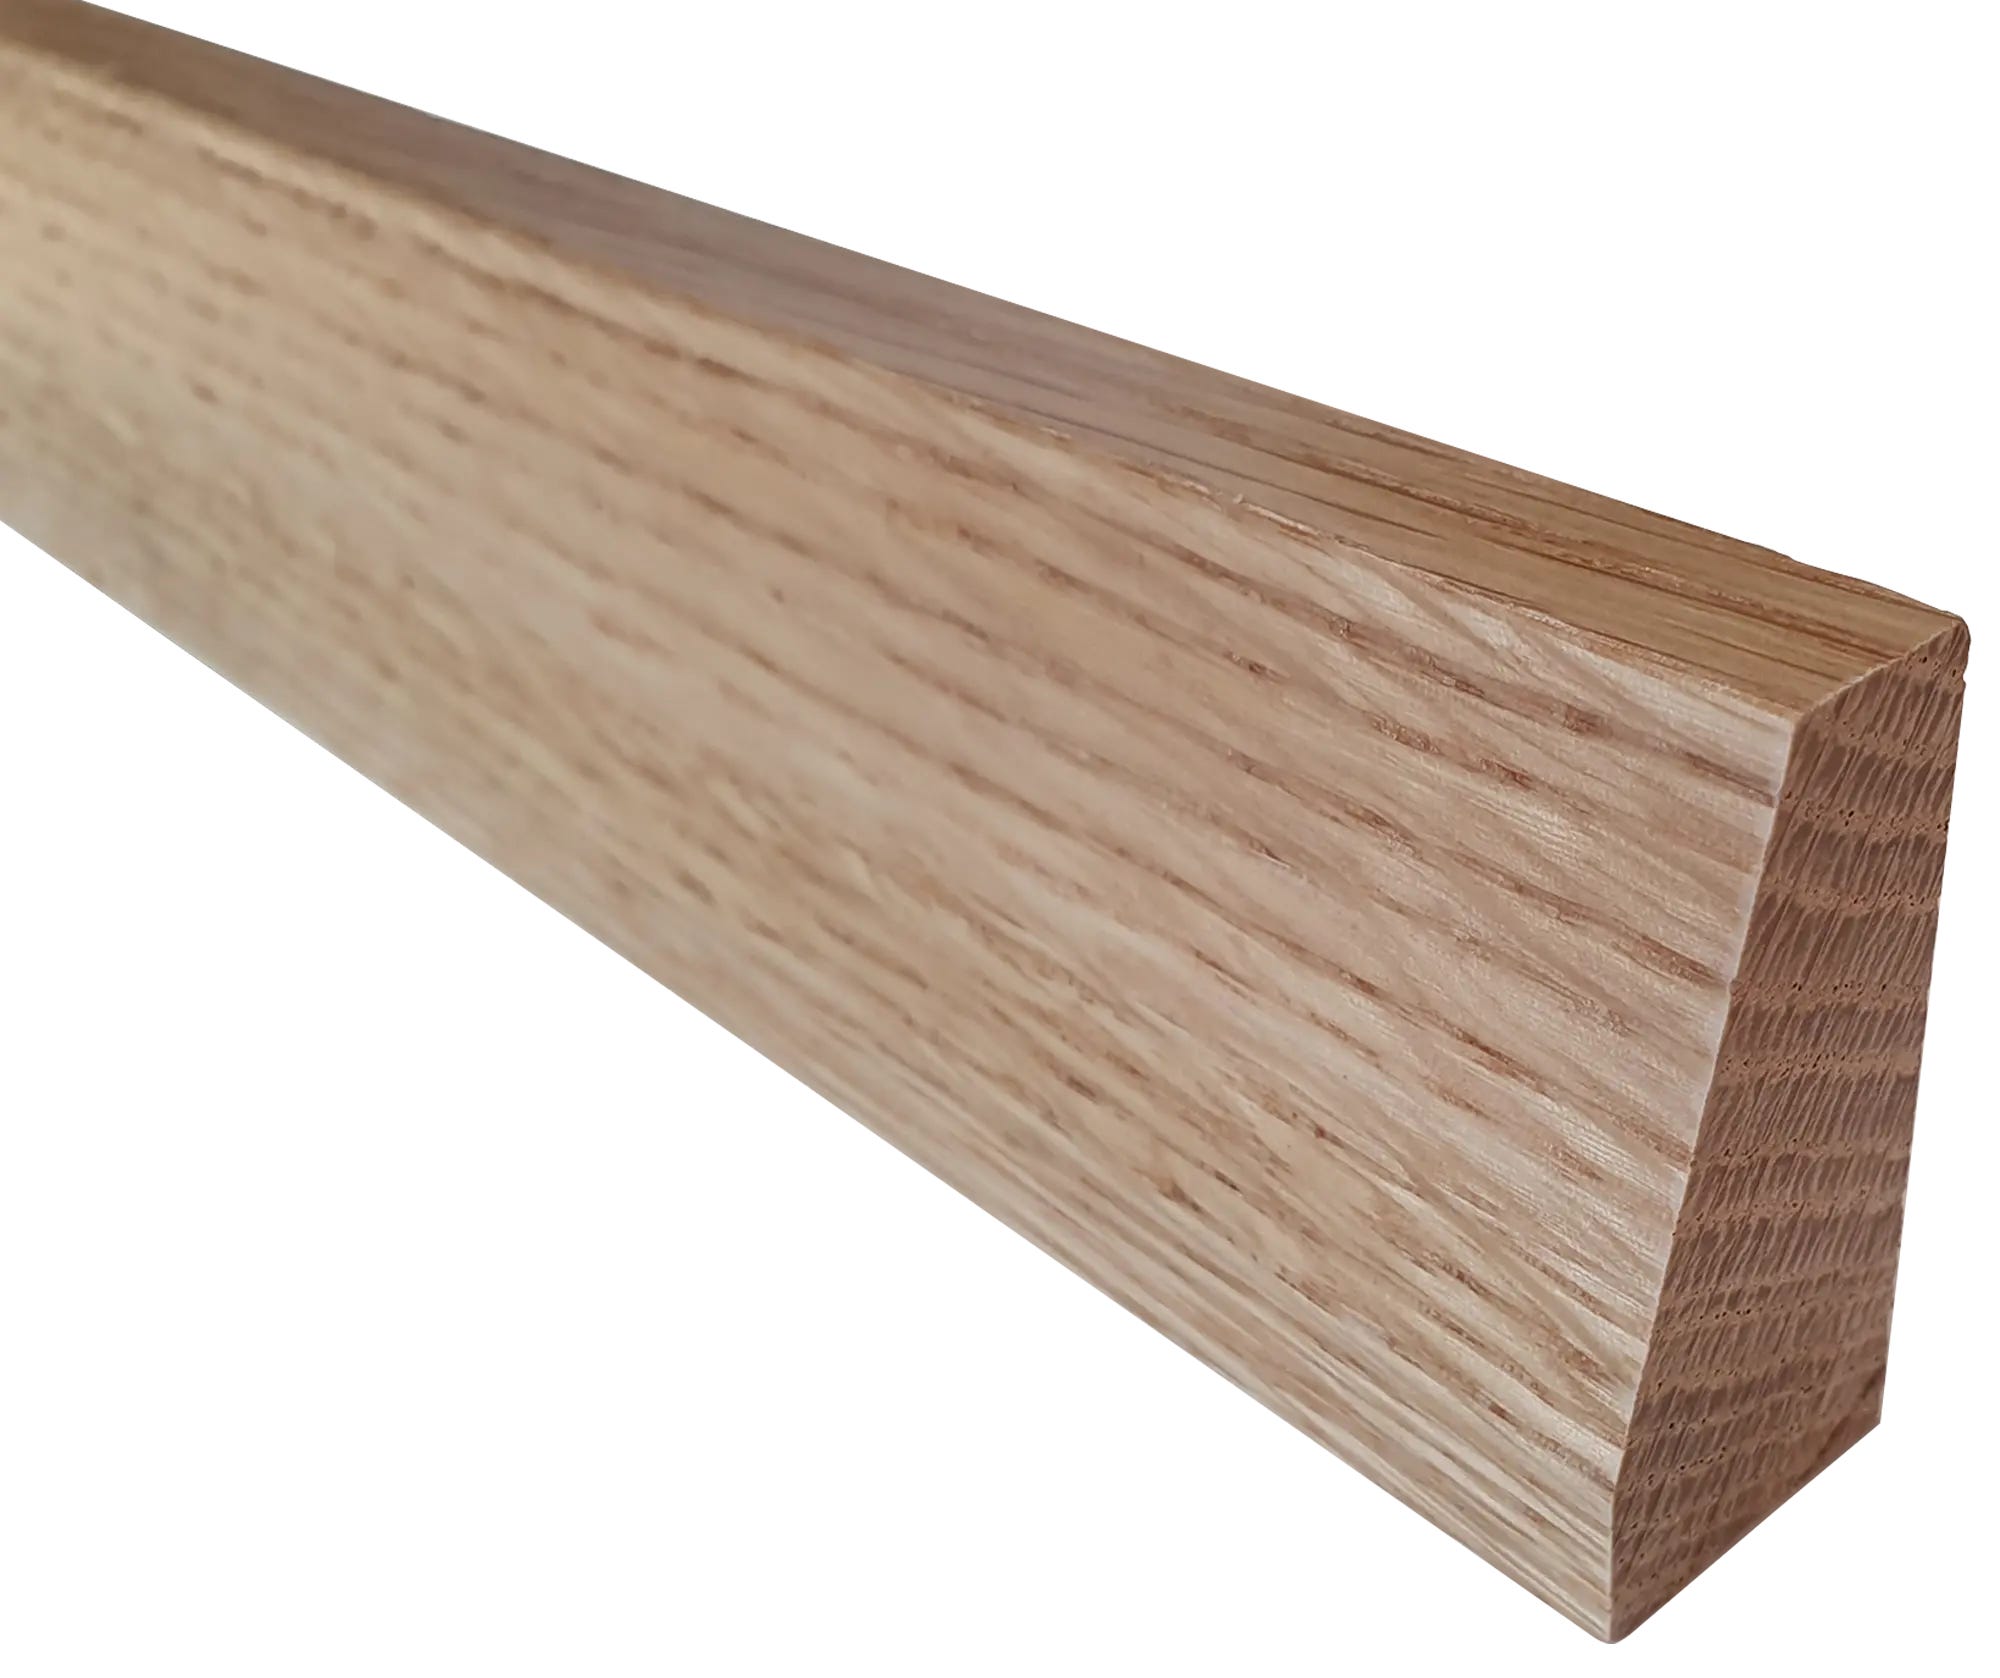 Burlete de madera roble para puerta 4,5x100 cm